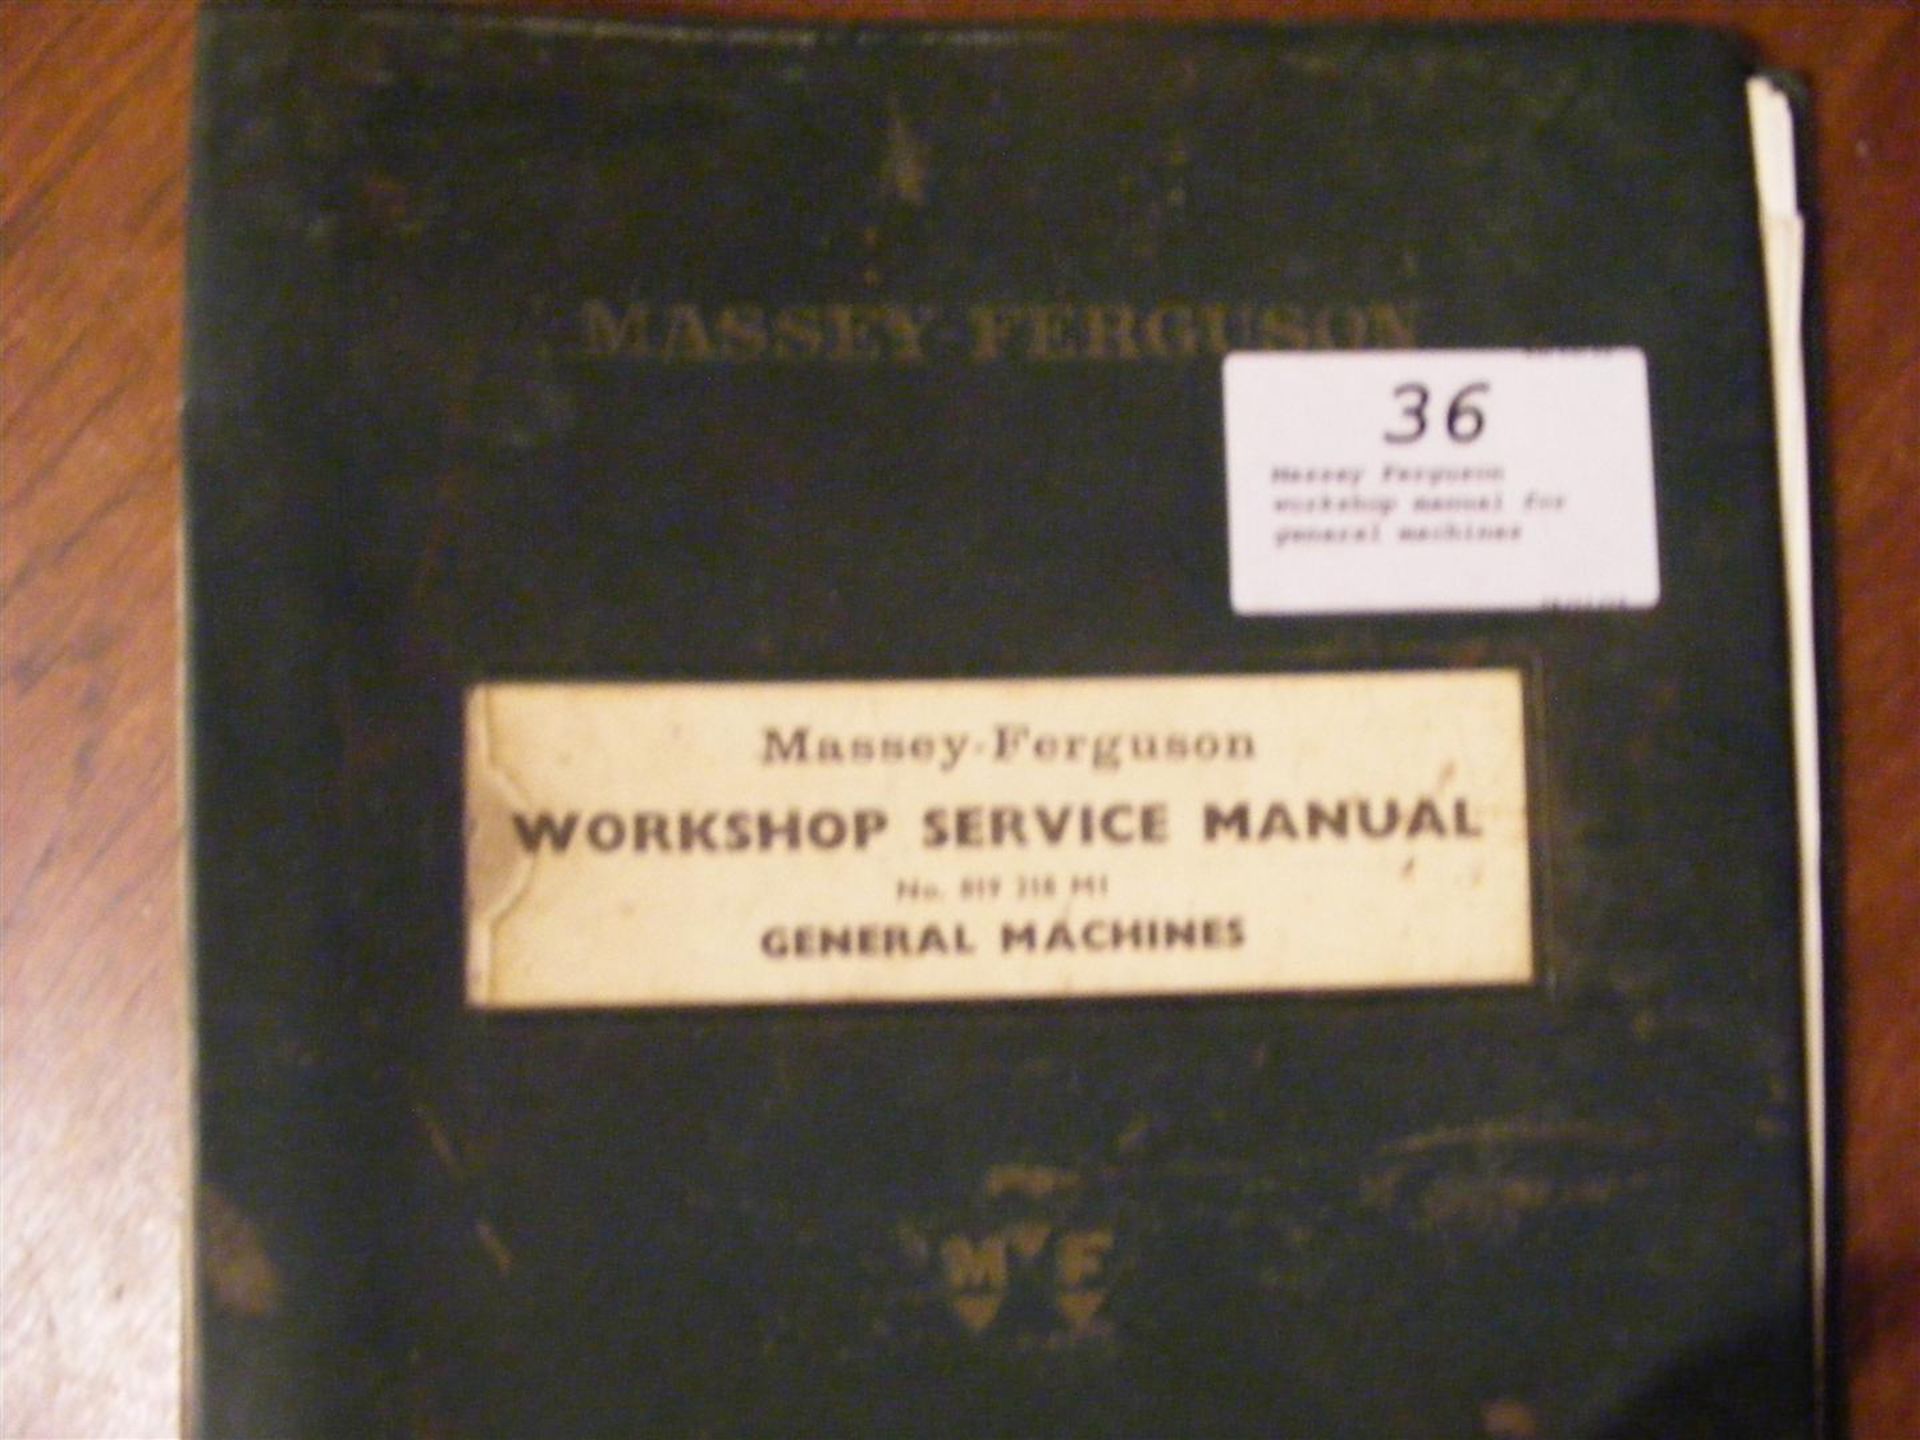 Massey Ferguson workshop manual for general machines